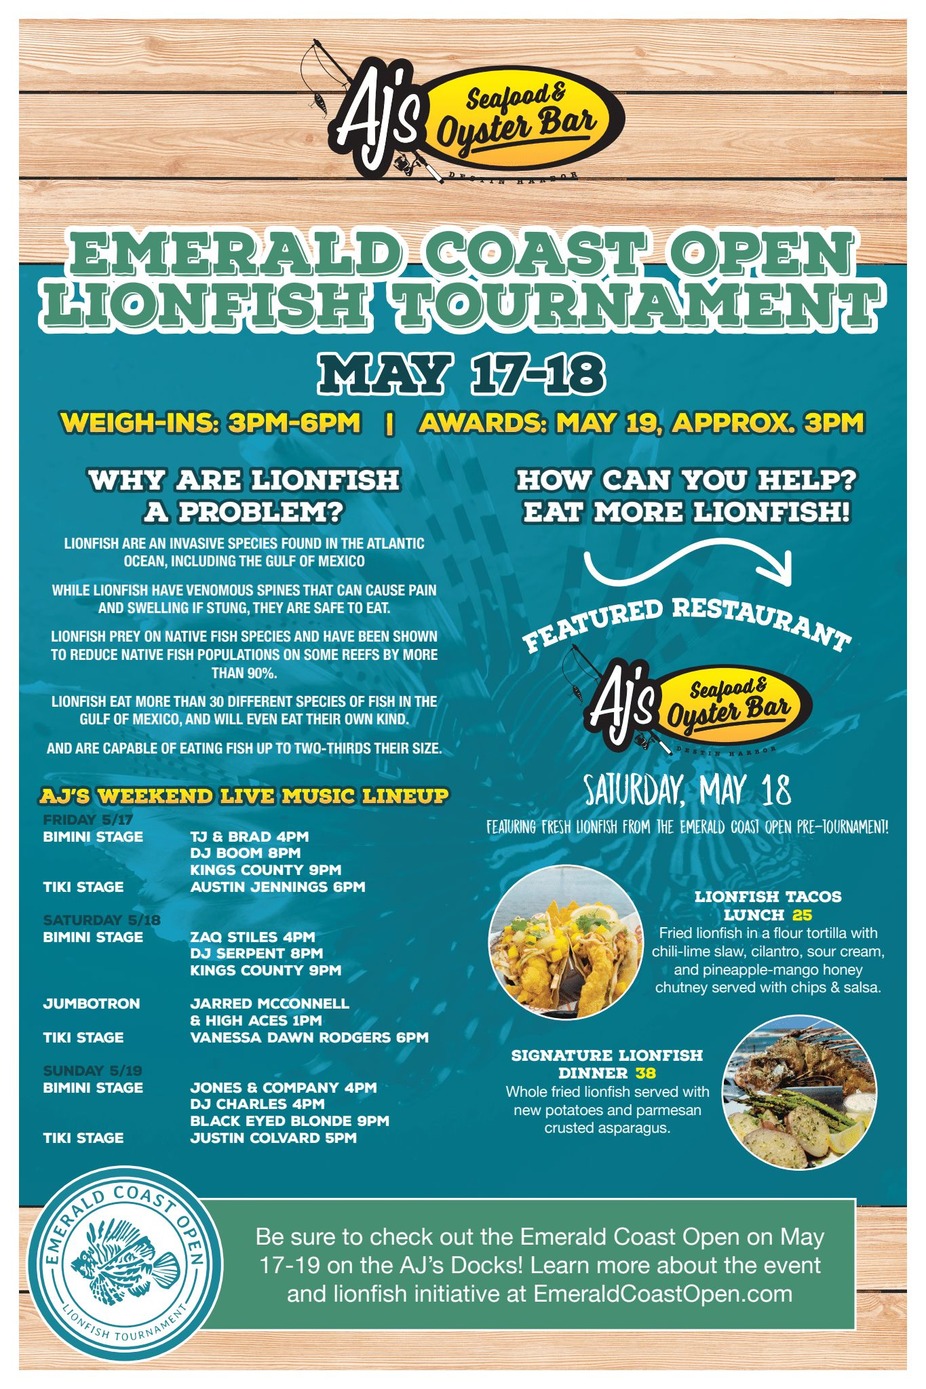 Emerald Coast Open Lionfish Tournament event photo